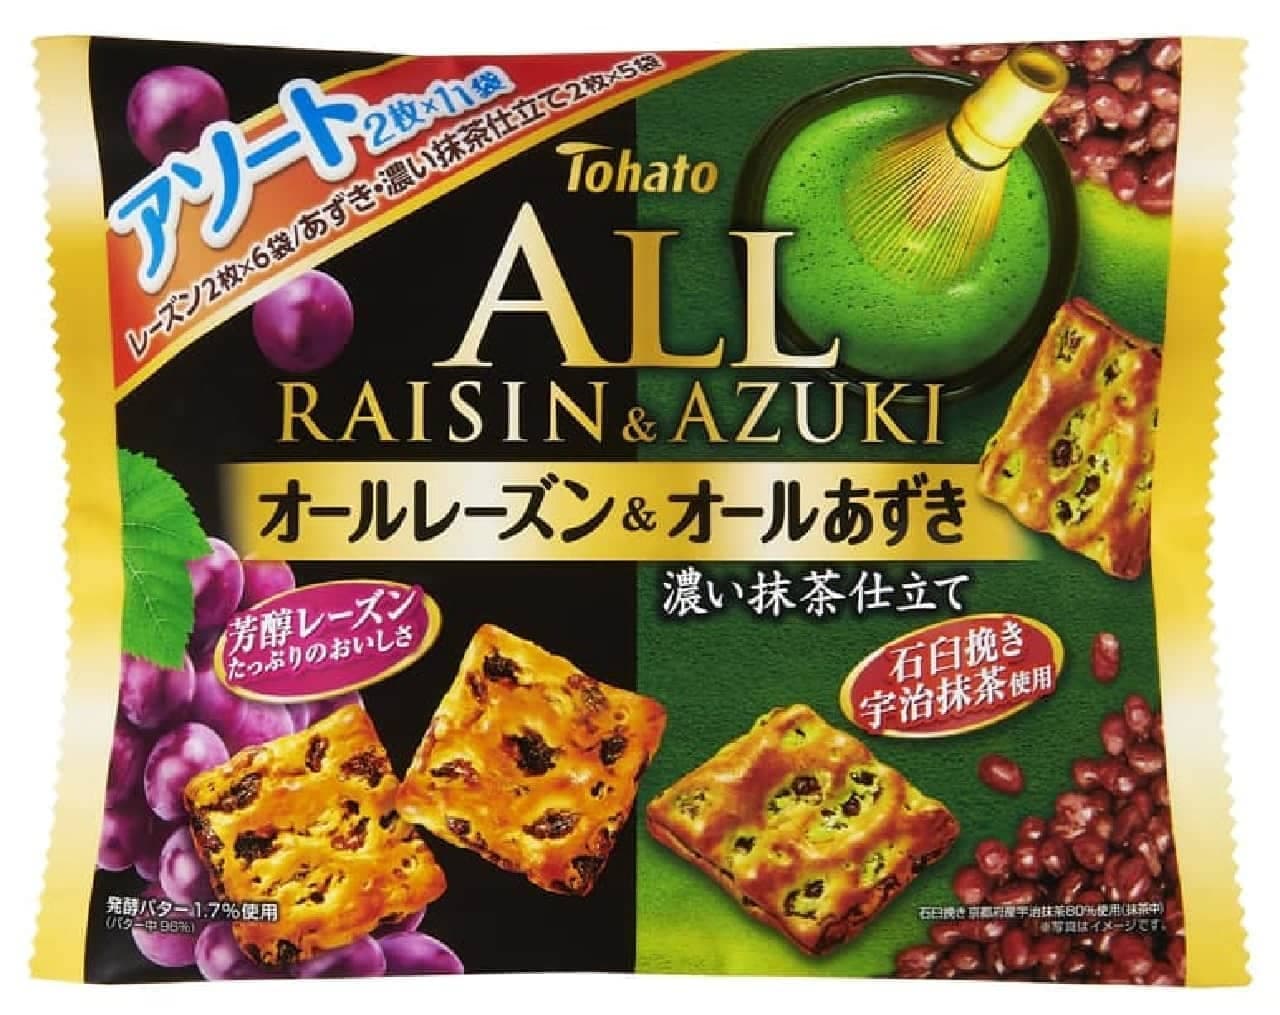 Tohato "Family size all assorted raisins & azuki bean, dark matcha tailoring"